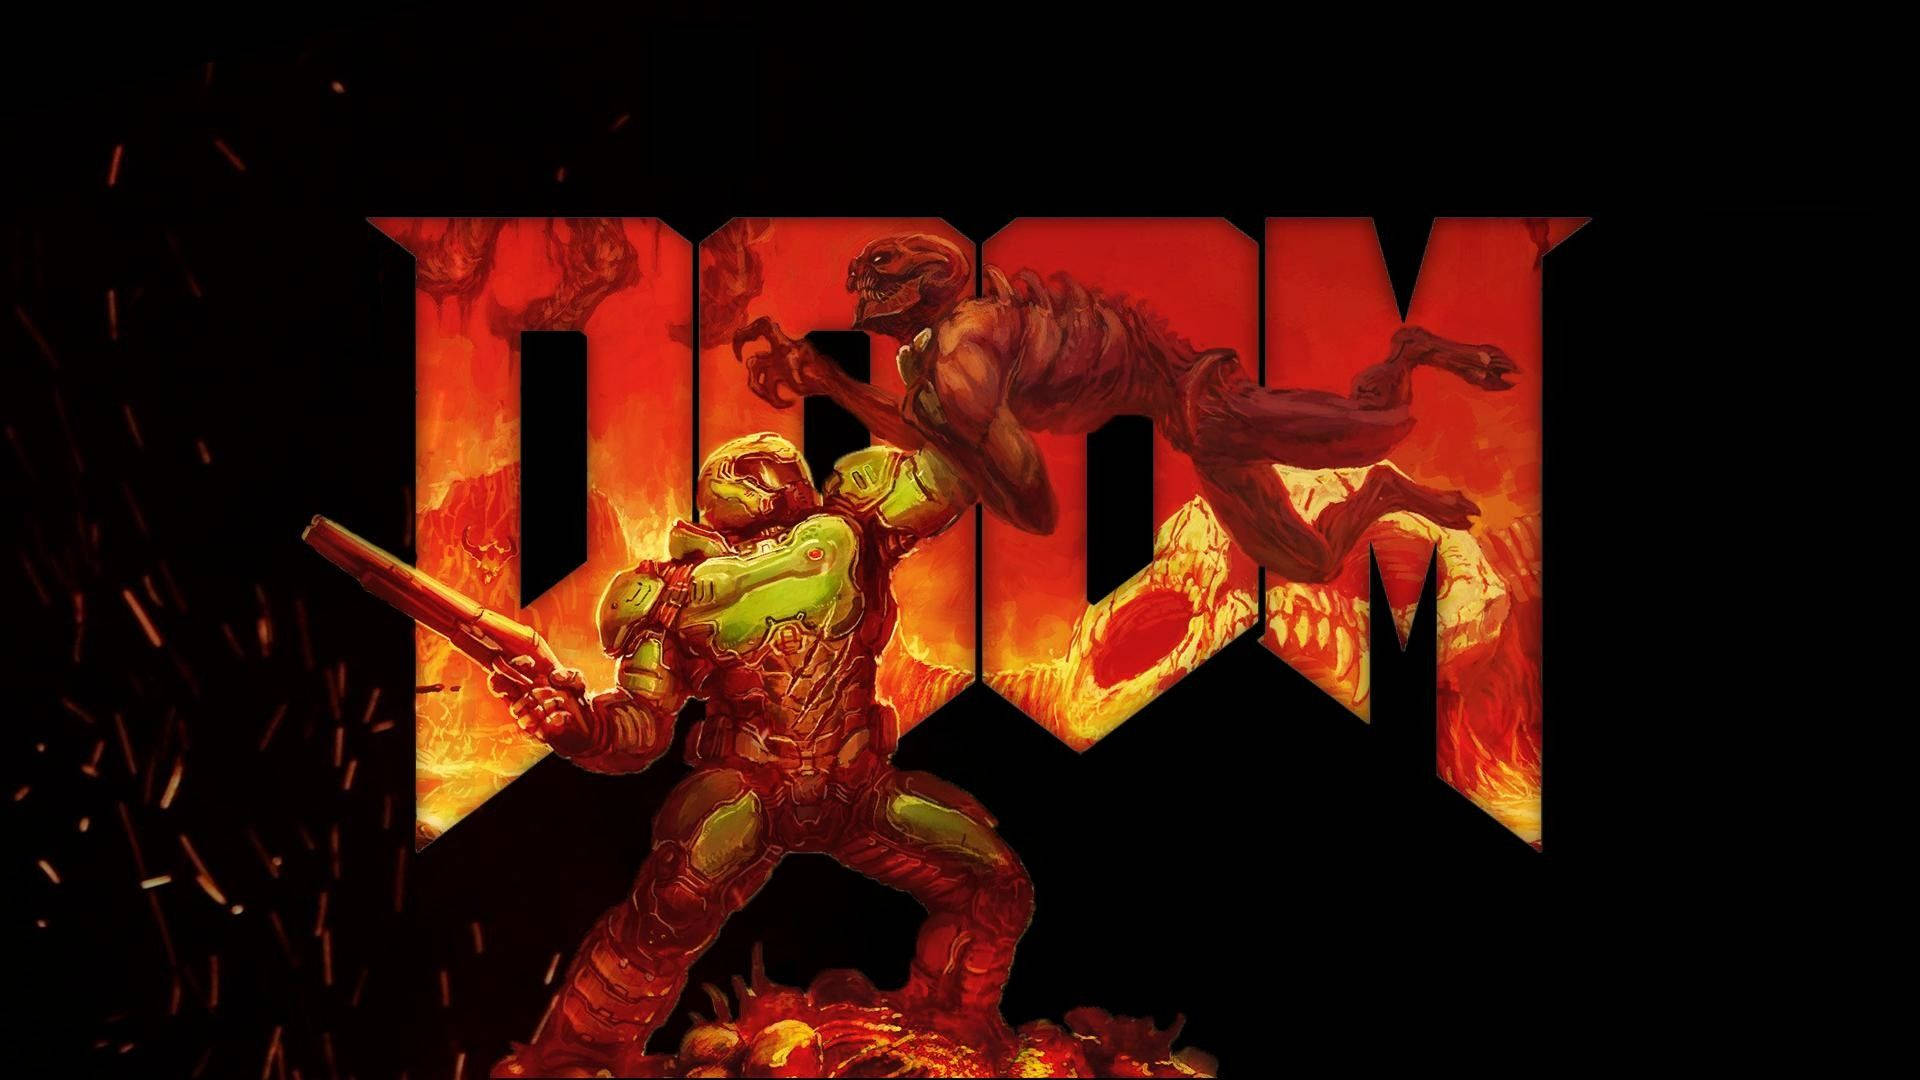 Top 999+ Doom Wallpaper Full HD, 4K Free to Use